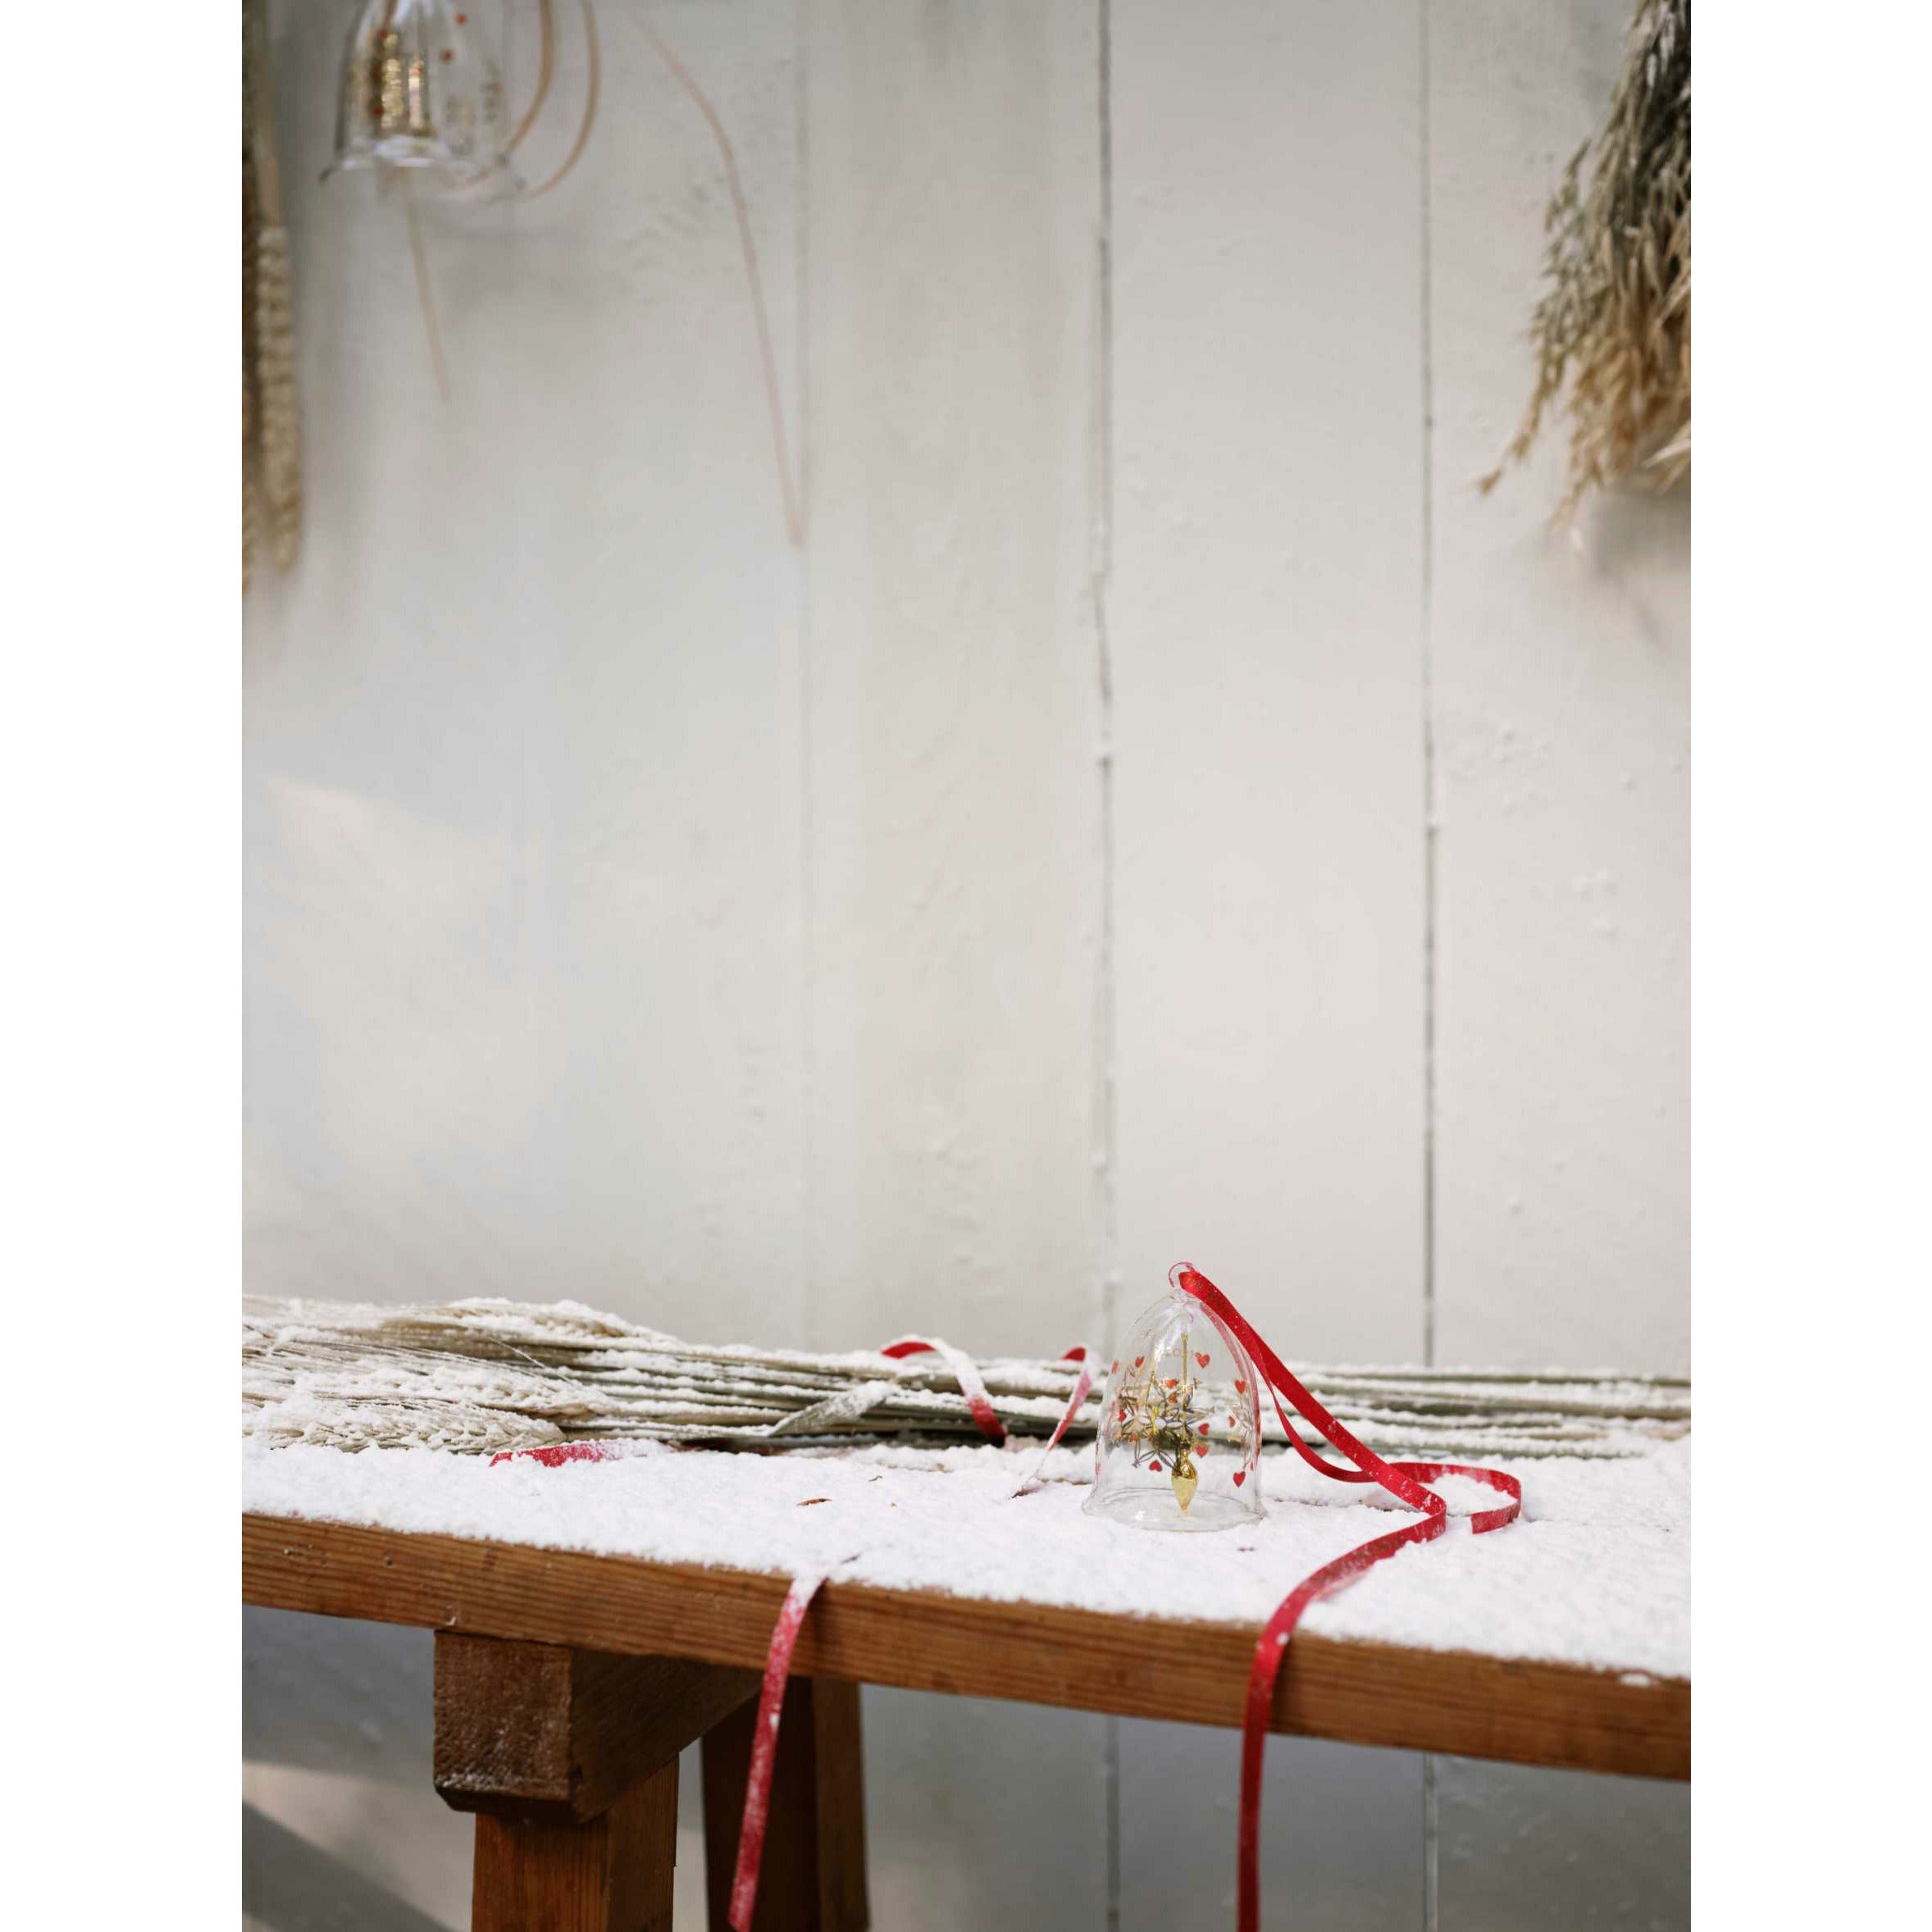 Holmegaard Ann Sofi Romme Christmas Bell, Large